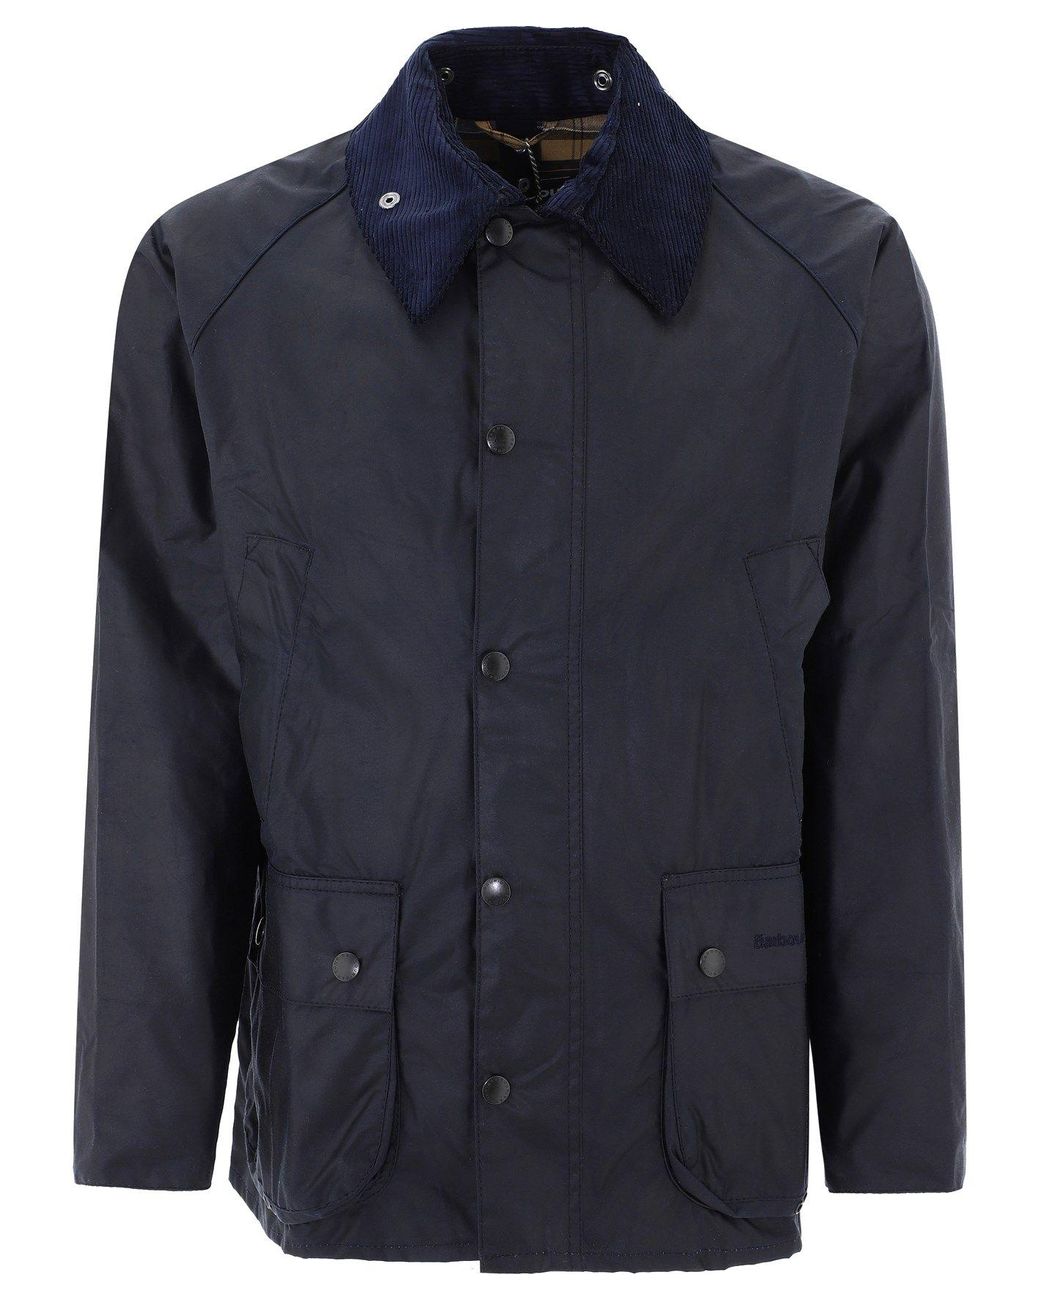 Barbour Cotton Jacket in Blue for Men - Lyst